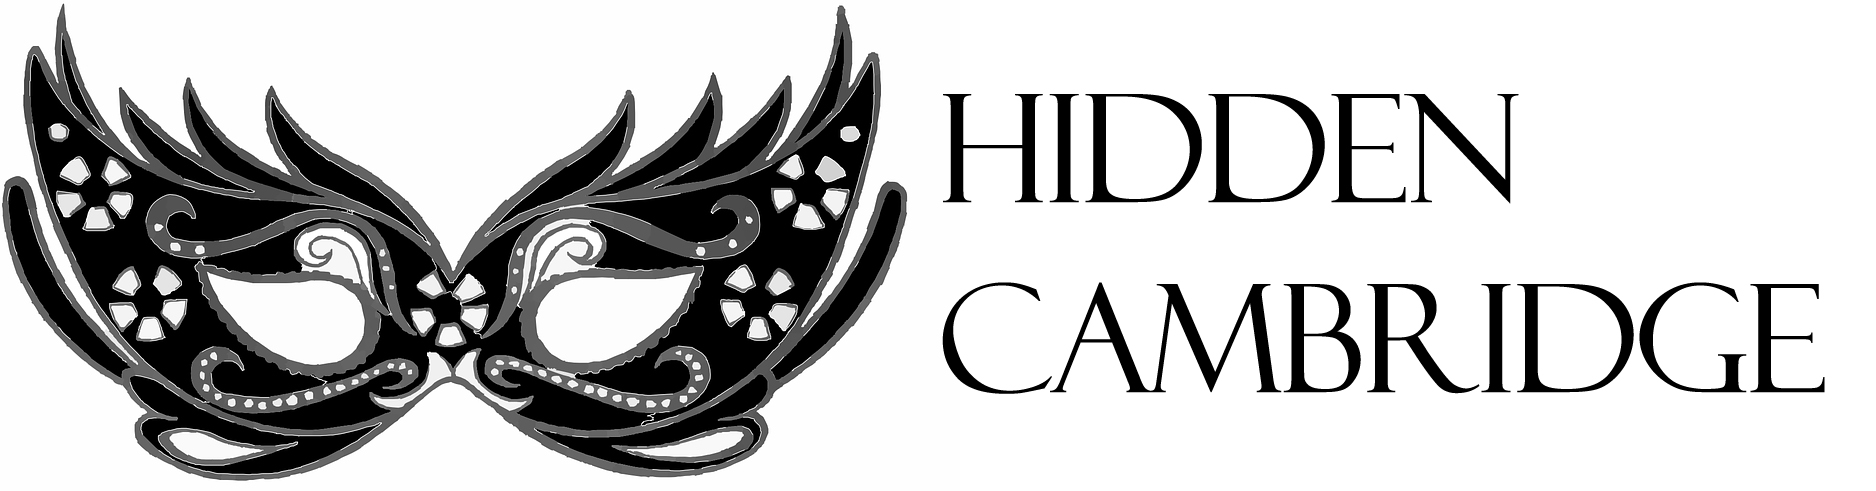 Hidden Cambridge